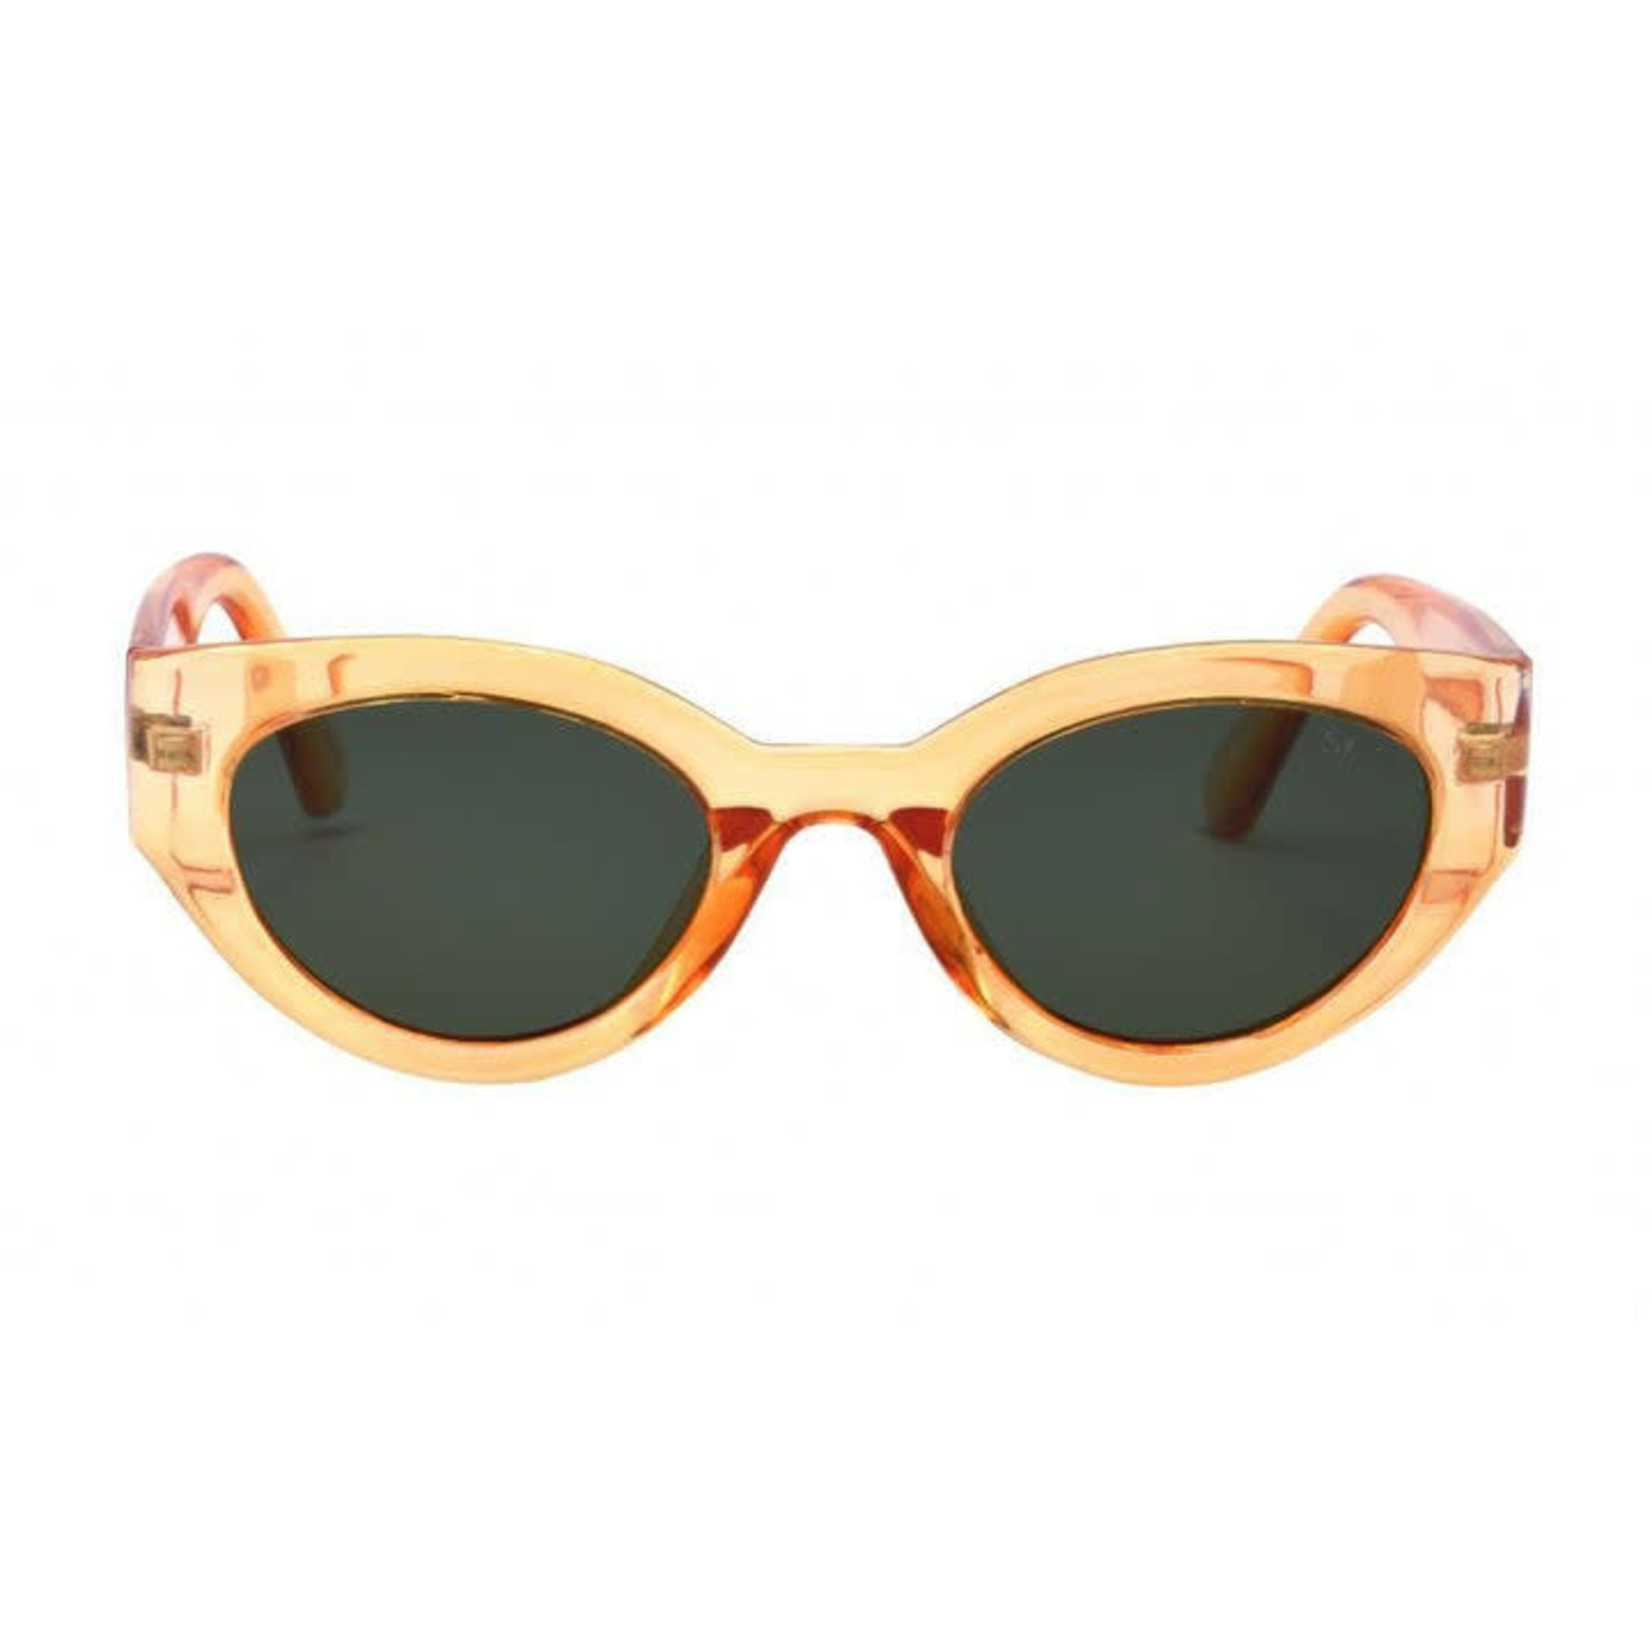 Ashbury Sky Sunglasses- Honey Yellow/ G15 Polarized